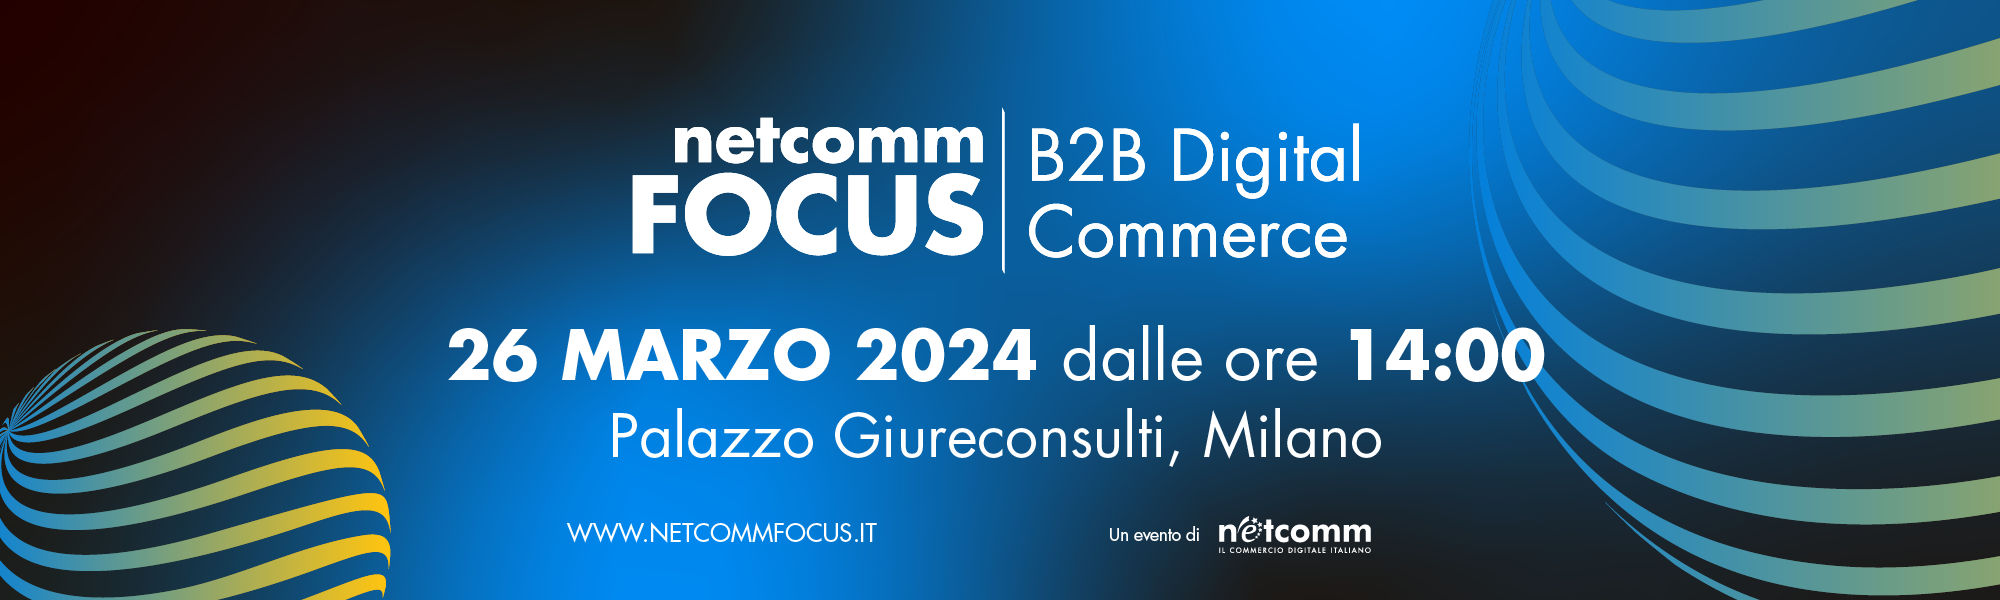 Netcomm FOCUS B2B Digital Commerce 2024